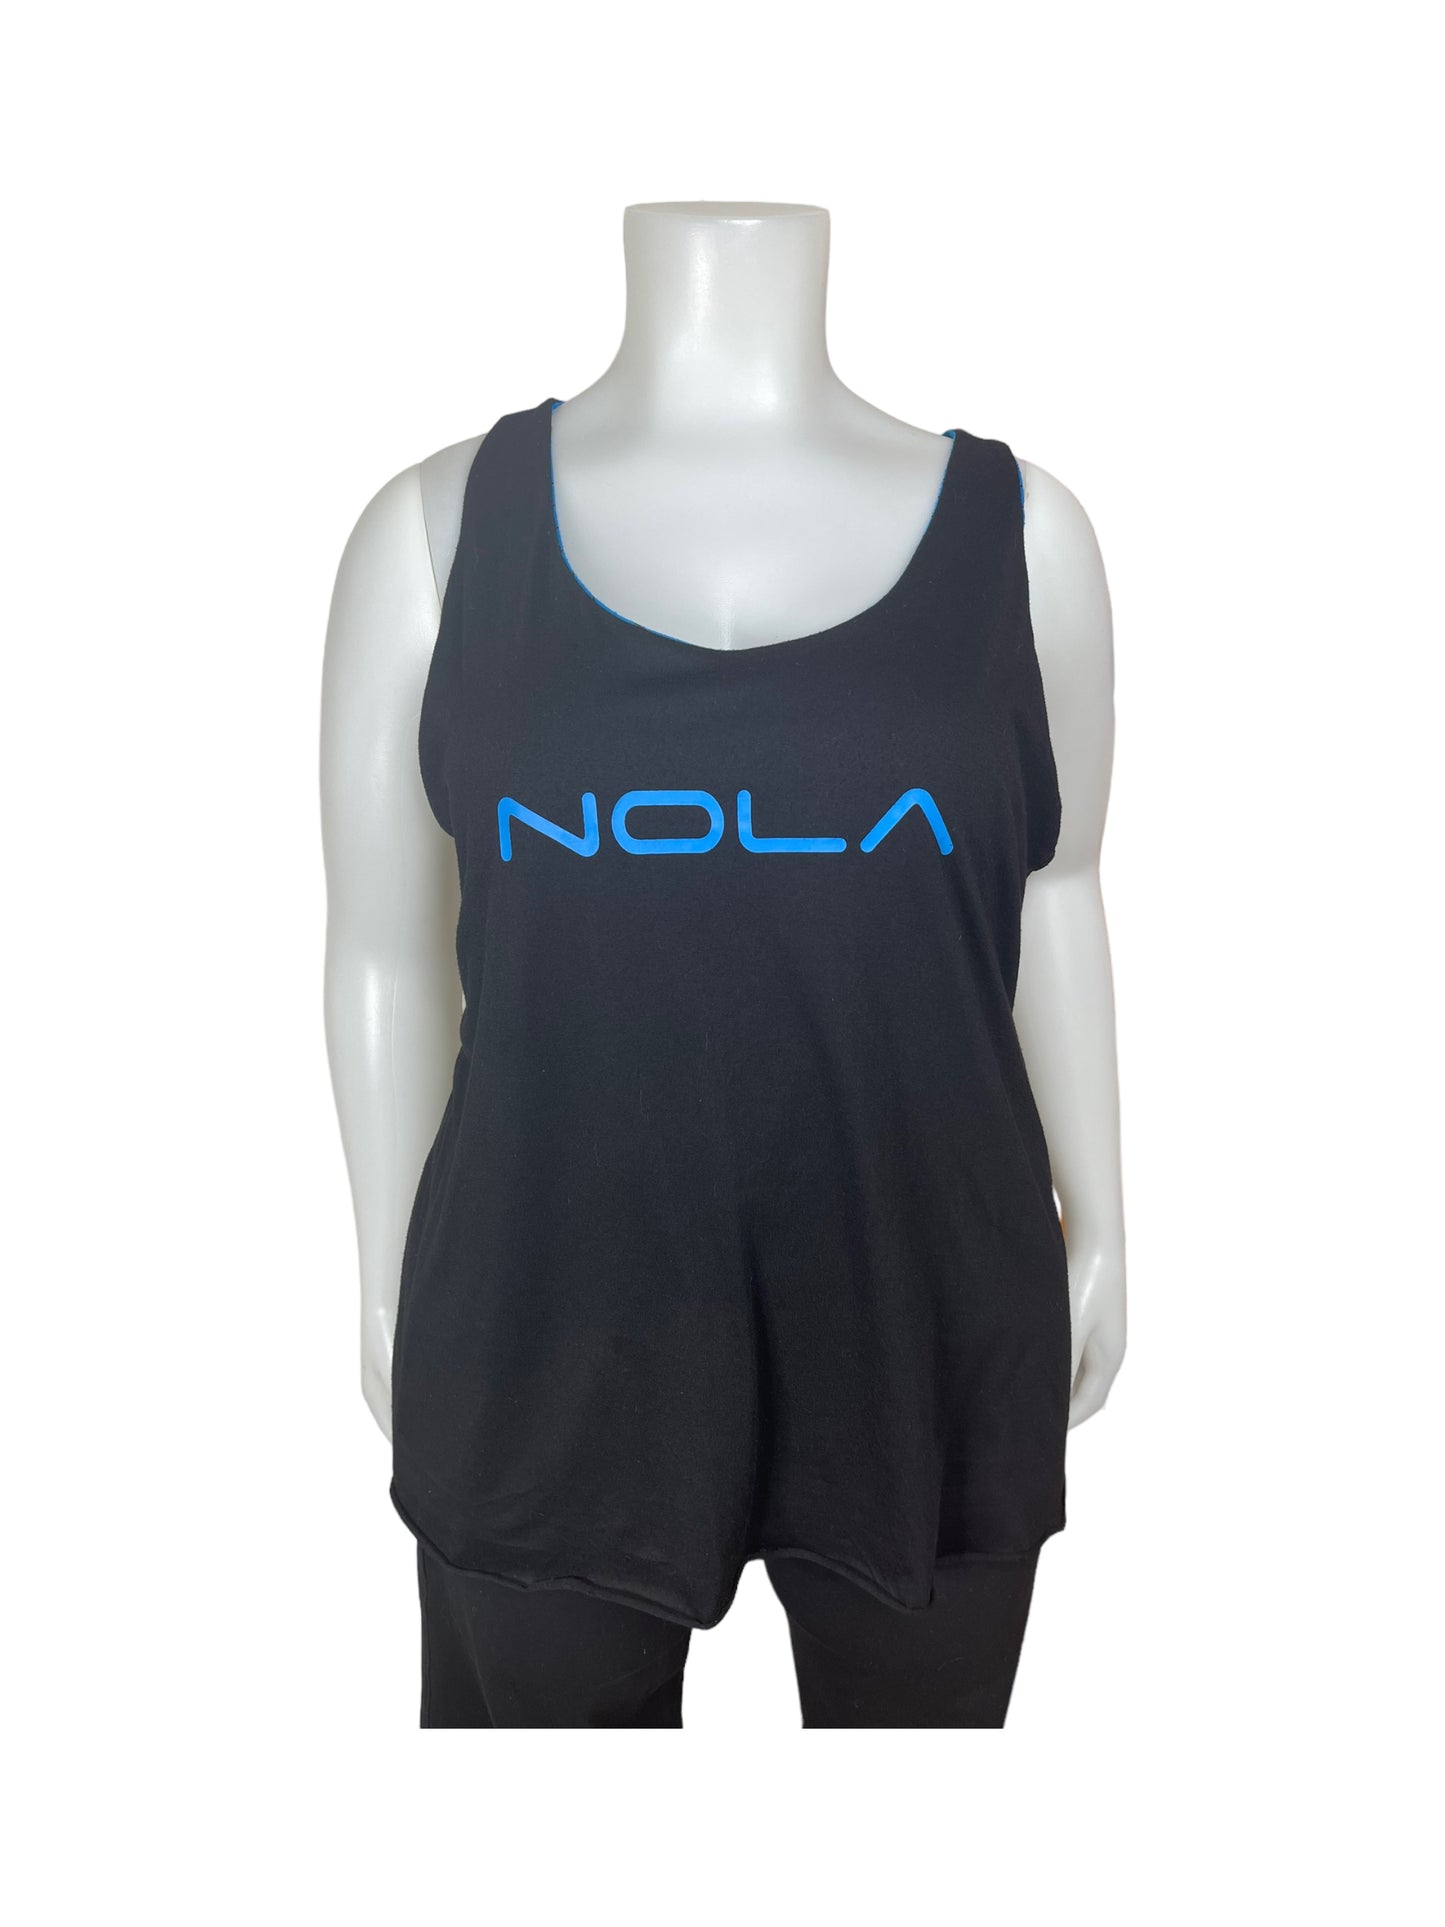 “Nola” Reversible Tank Top (3X) Blue w/ Black Stripes, Black w/ Blue ‘NOLA’ on Chest